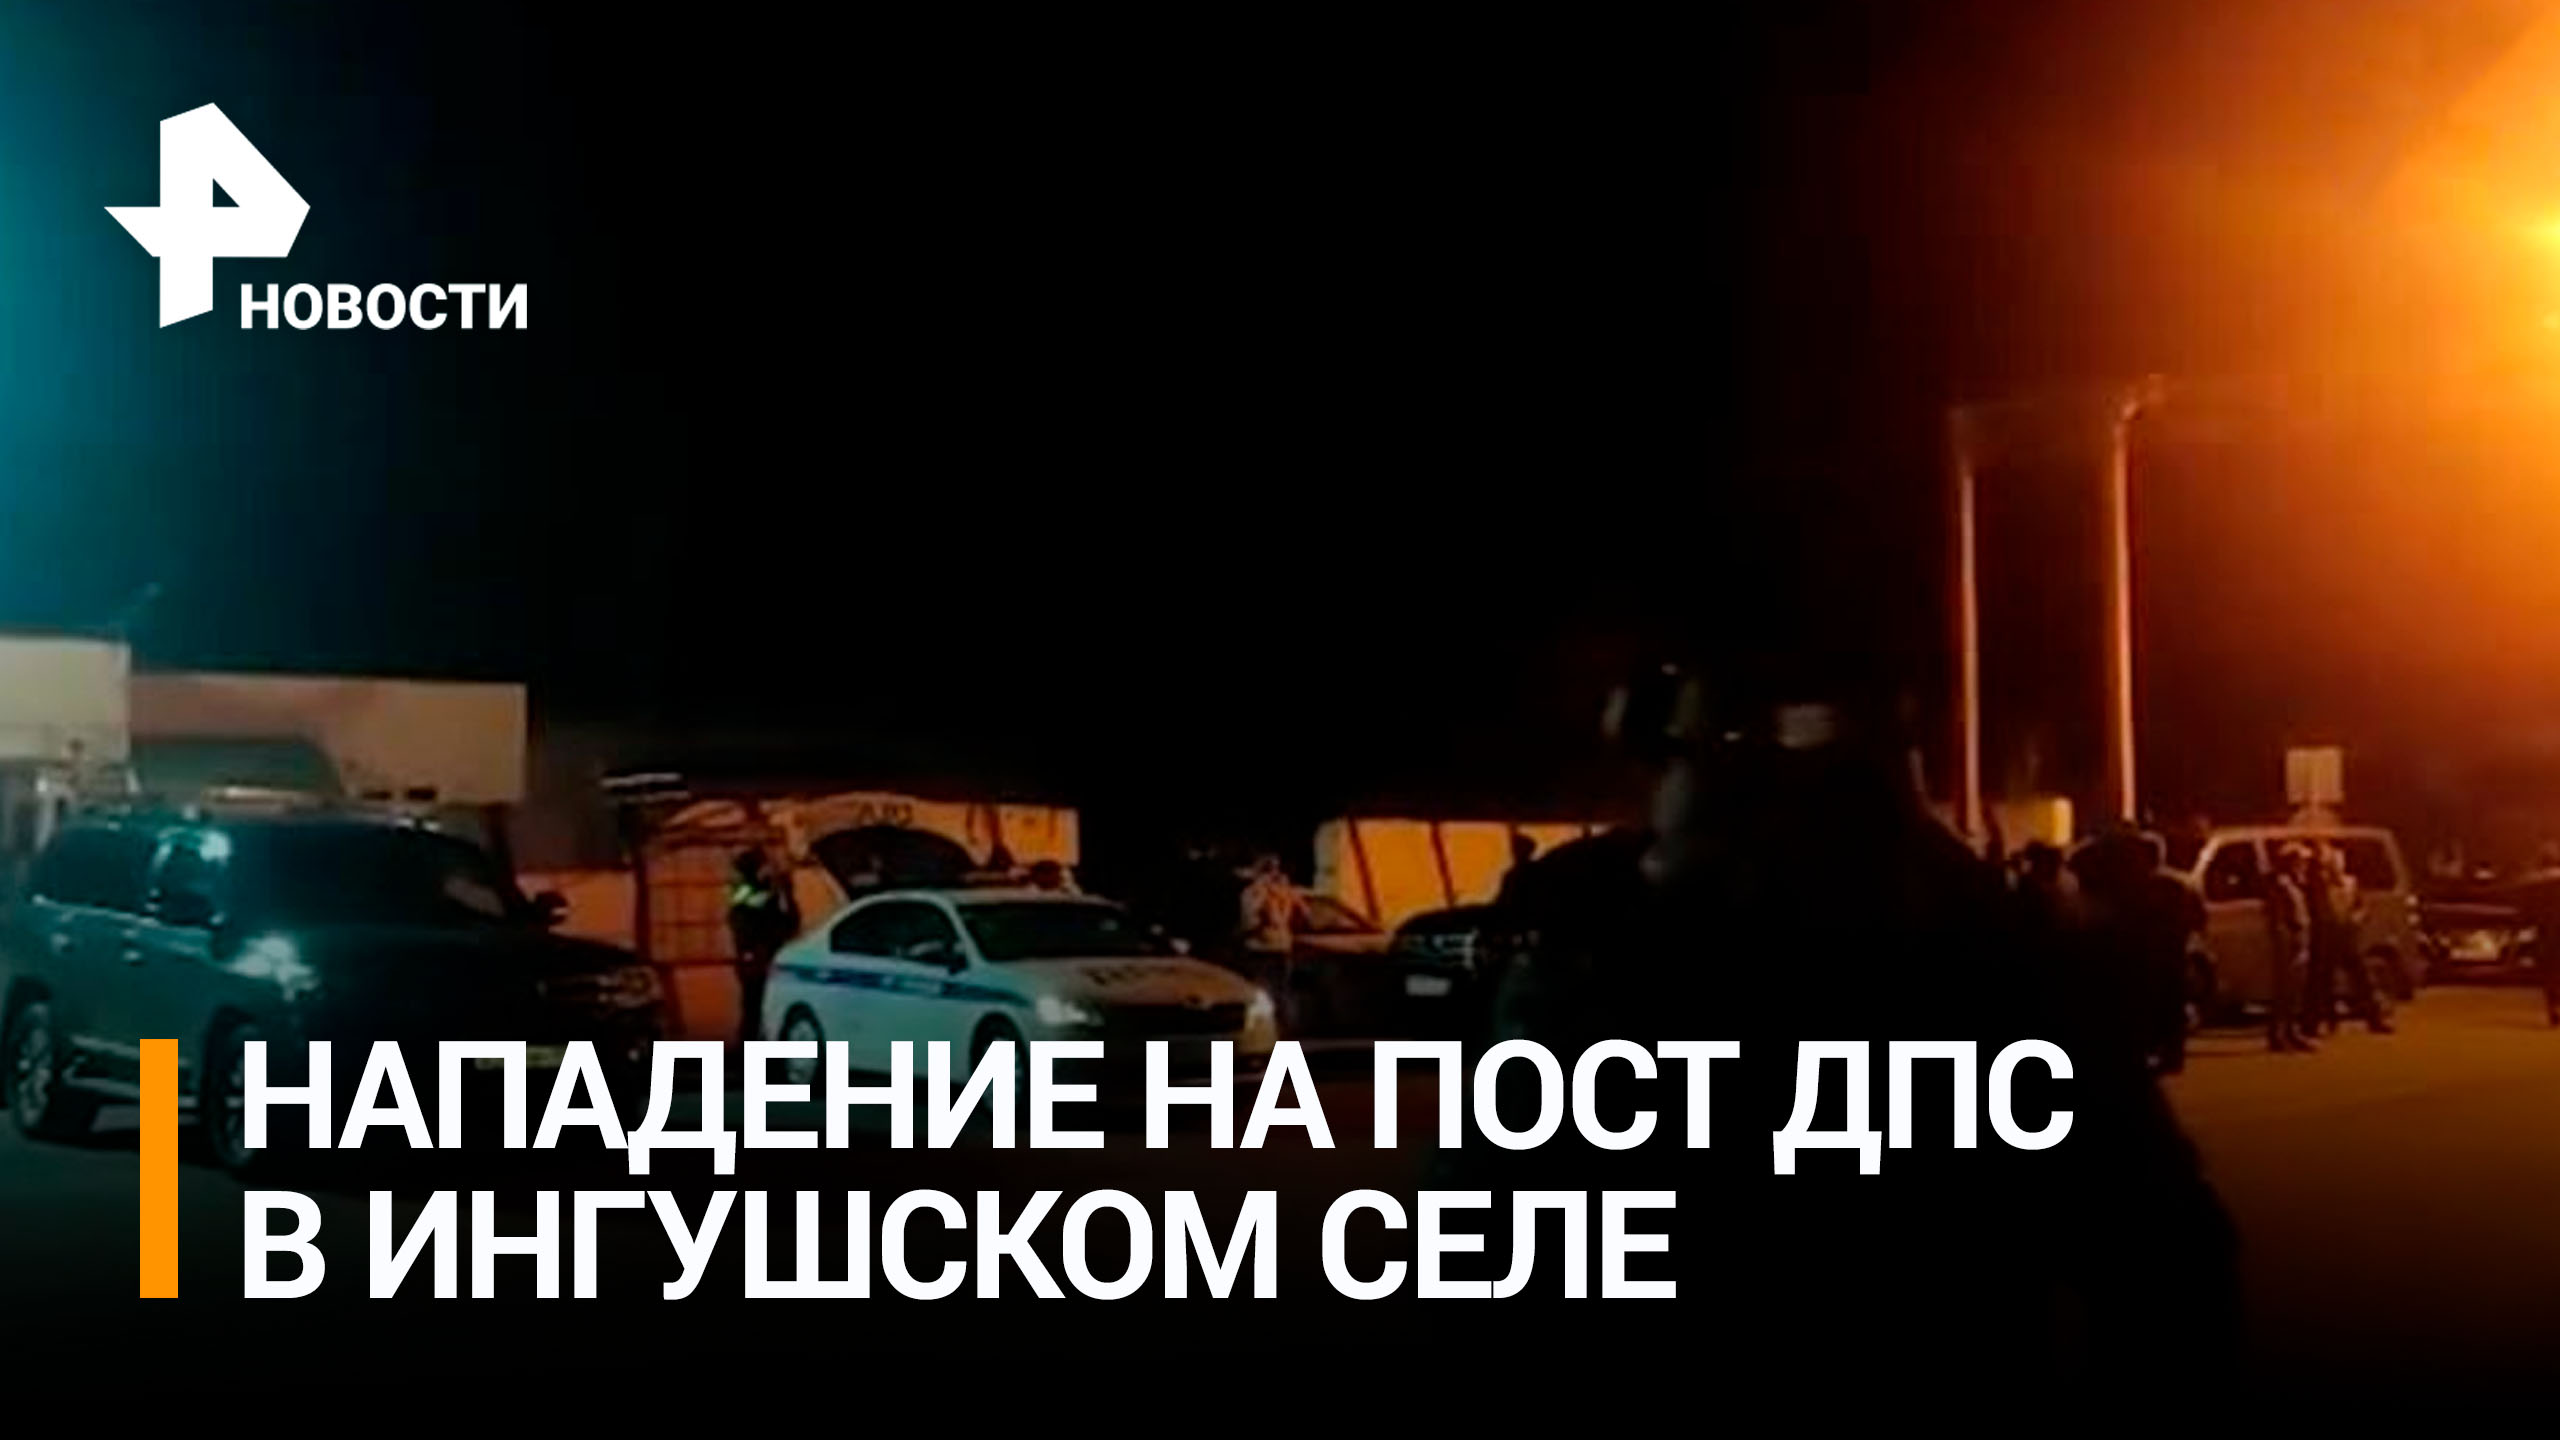 Два полицейских пострадали при нападении на пост ДПС в Ингушетии / РЕН Новости